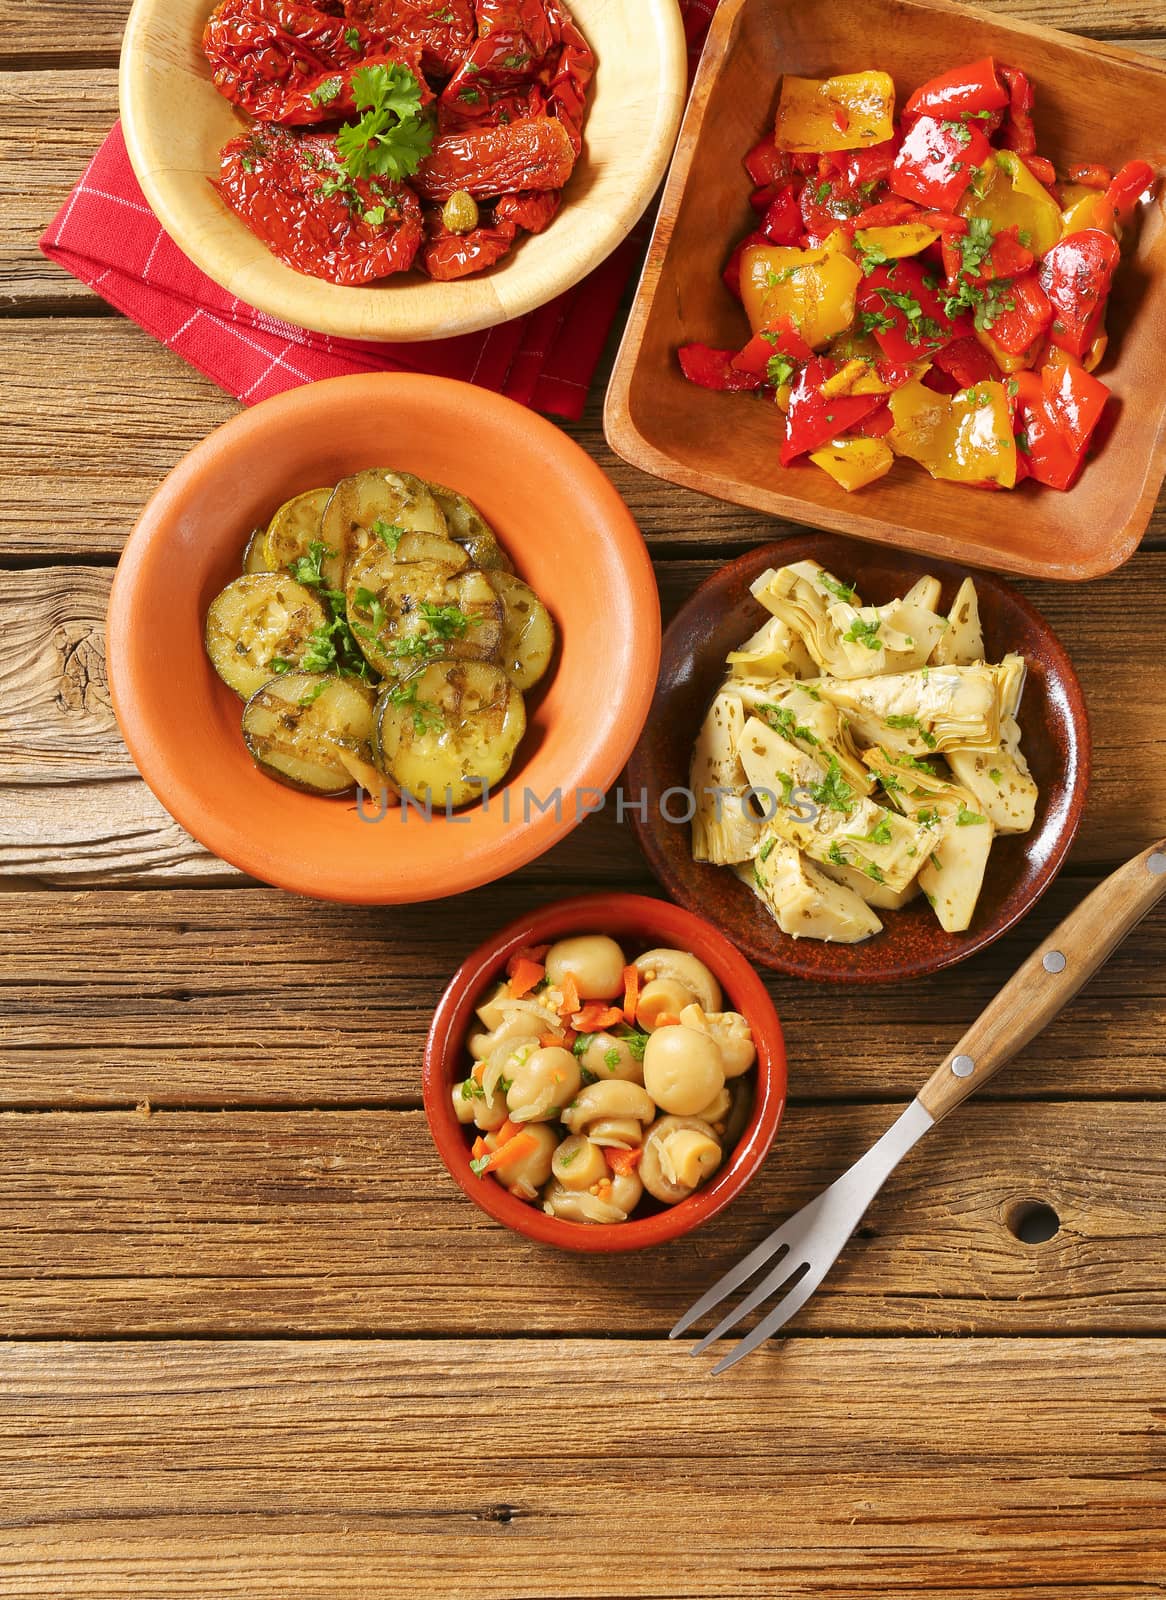 bowls of assorted pickled vegetables on wooden background